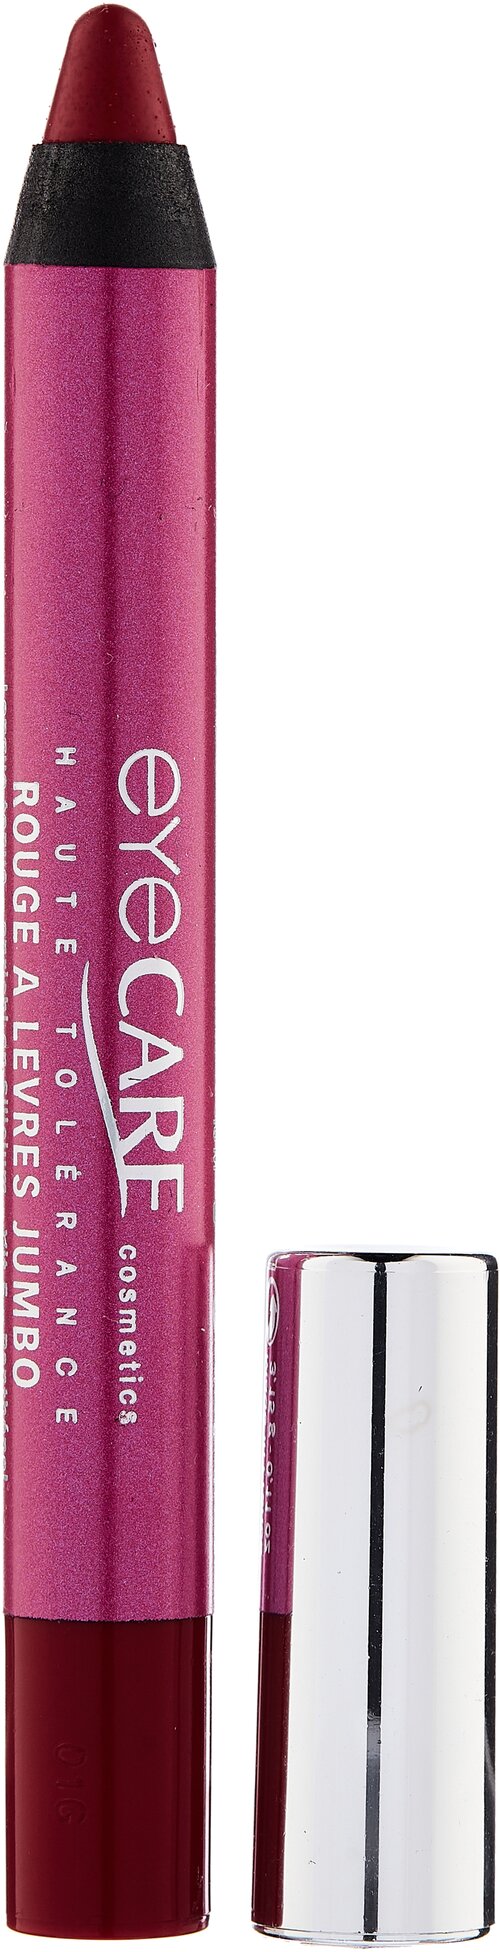 Eye Care Cosmetics Помада-карандаш для губ Jumbo, оттенок cerise